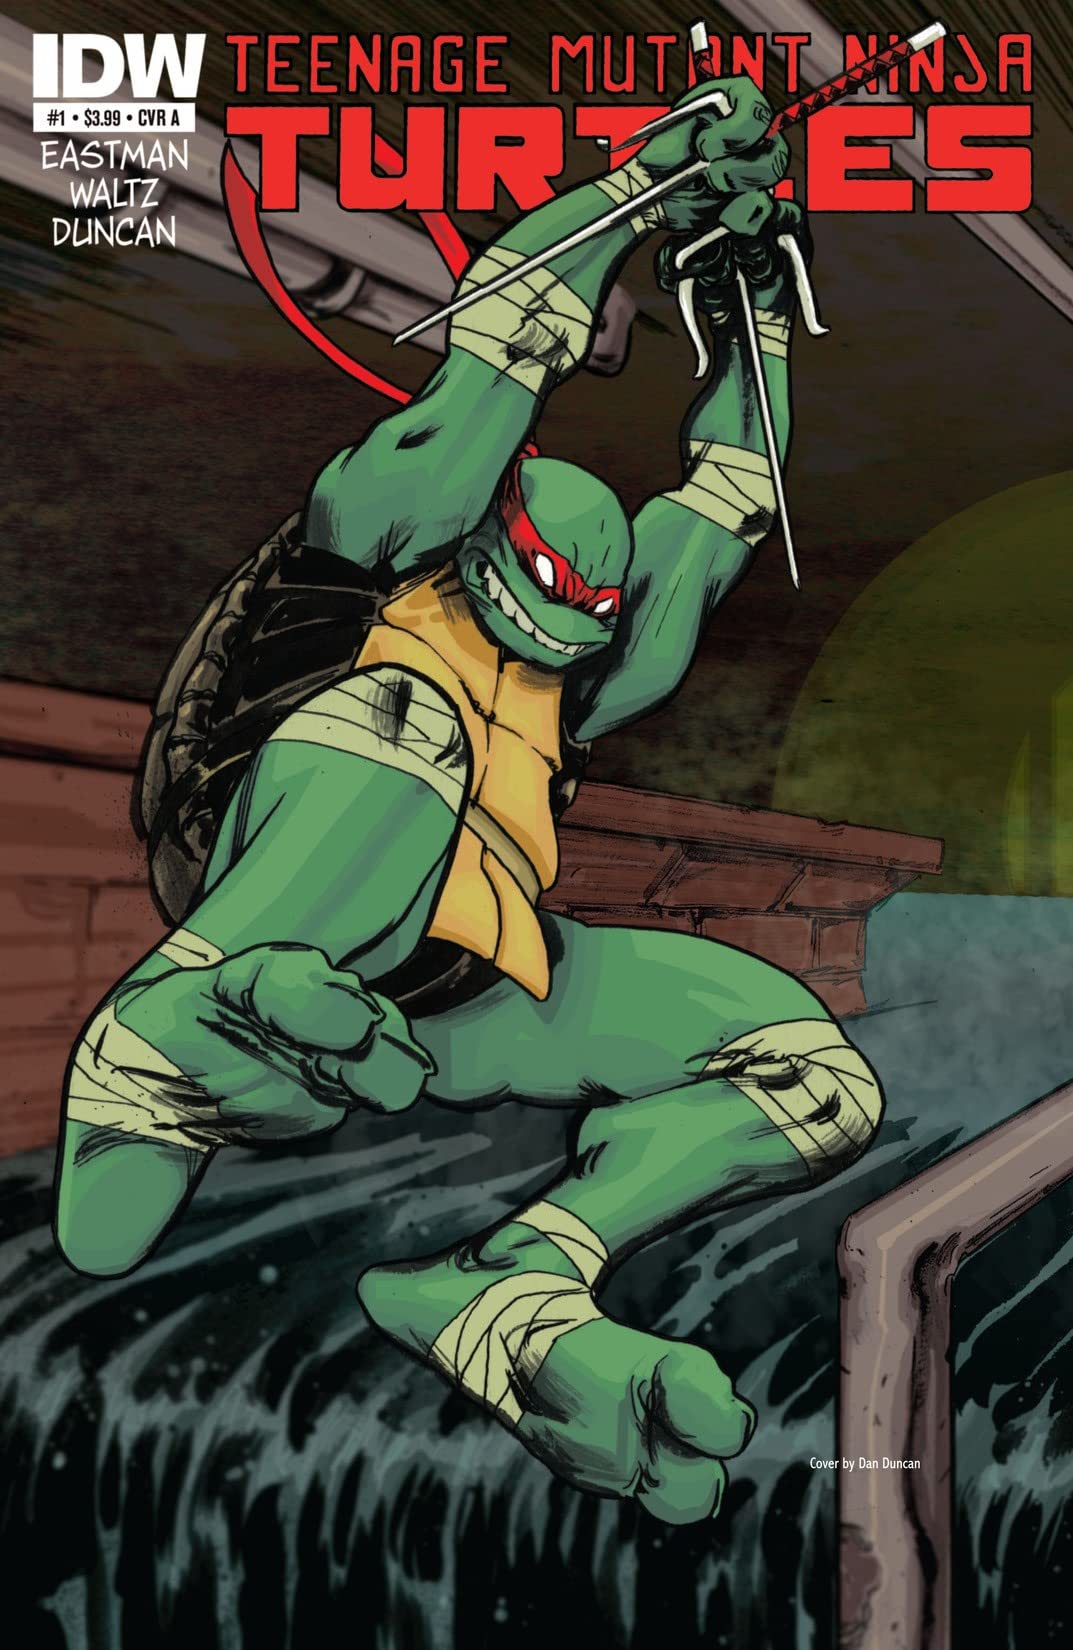 https://static.wikia.nocookie.net/comics/images/8/85/Teenage_Mutant_Ninja_Turtles_1.jpg/revision/latest?cb=20201022121055